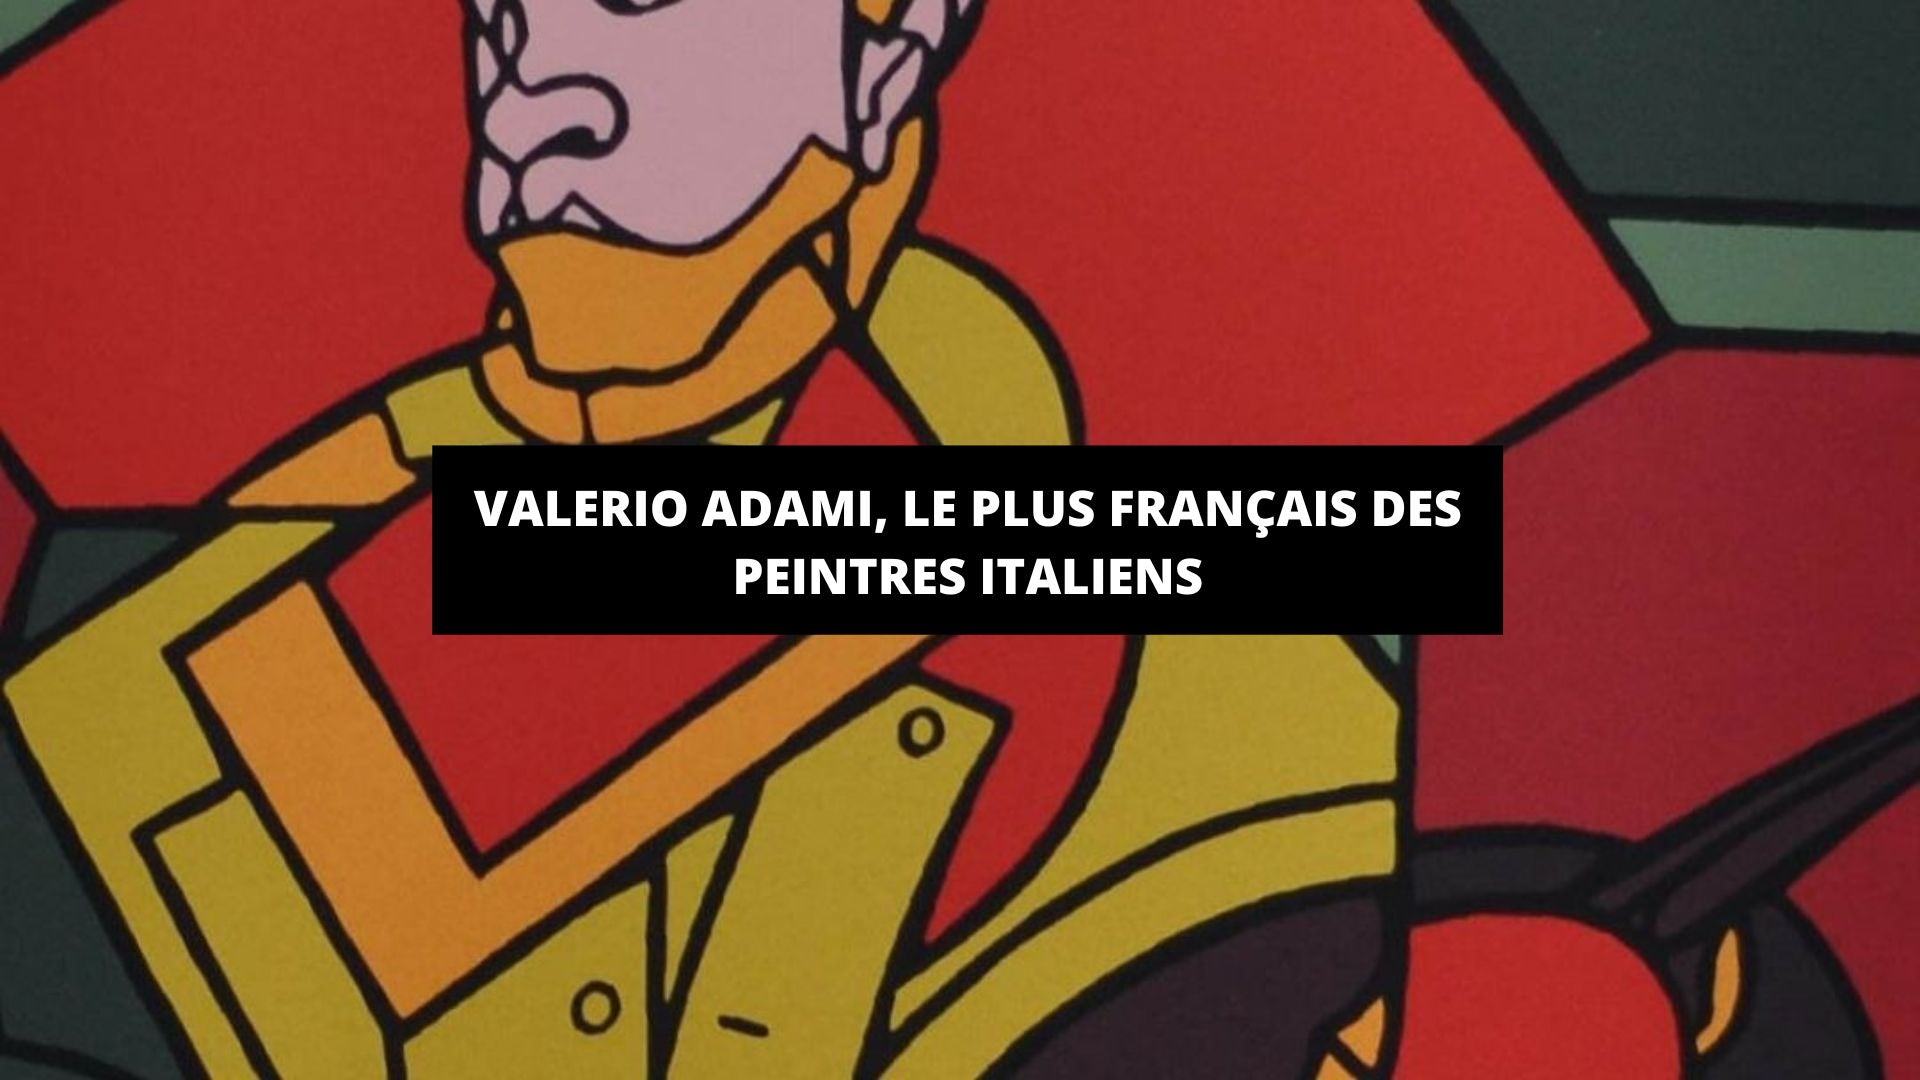 Valerio Adami, le plus français des peintres italiens - The Art Avenue